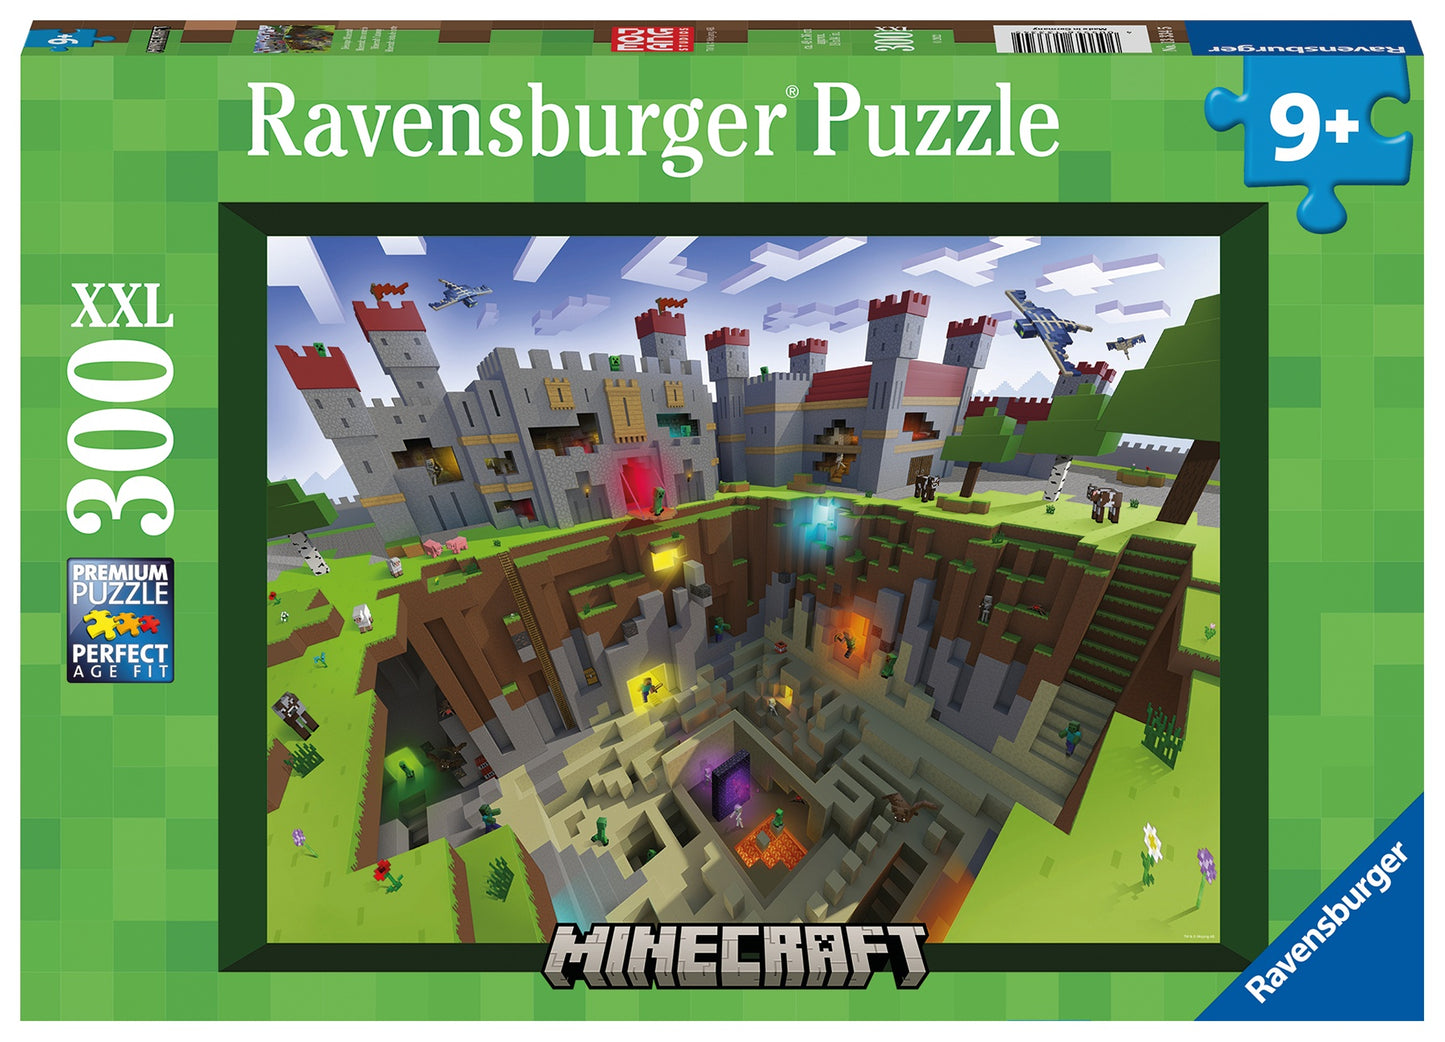 Ravensburger Minecraft Puzzle 300 XXL